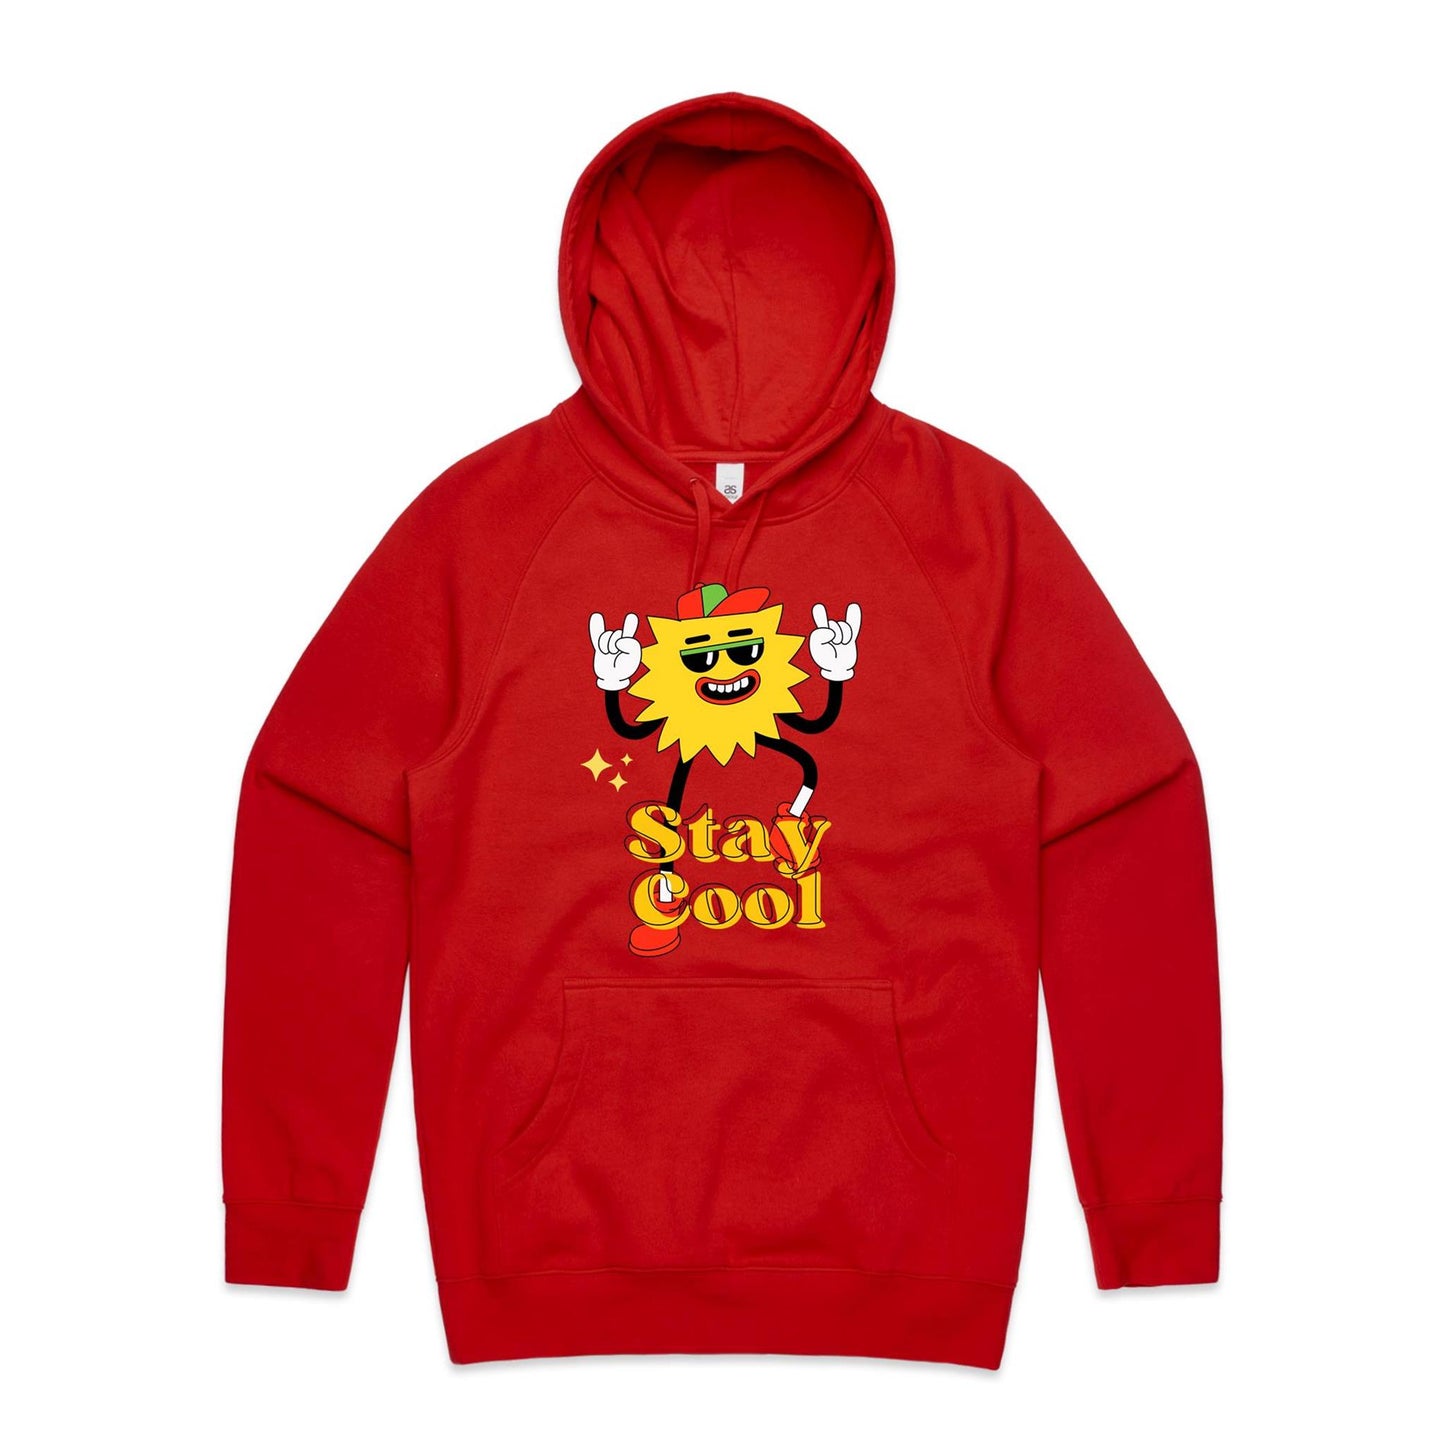 Stay Cool - Supply Hood Red Mens Supply Hoodie